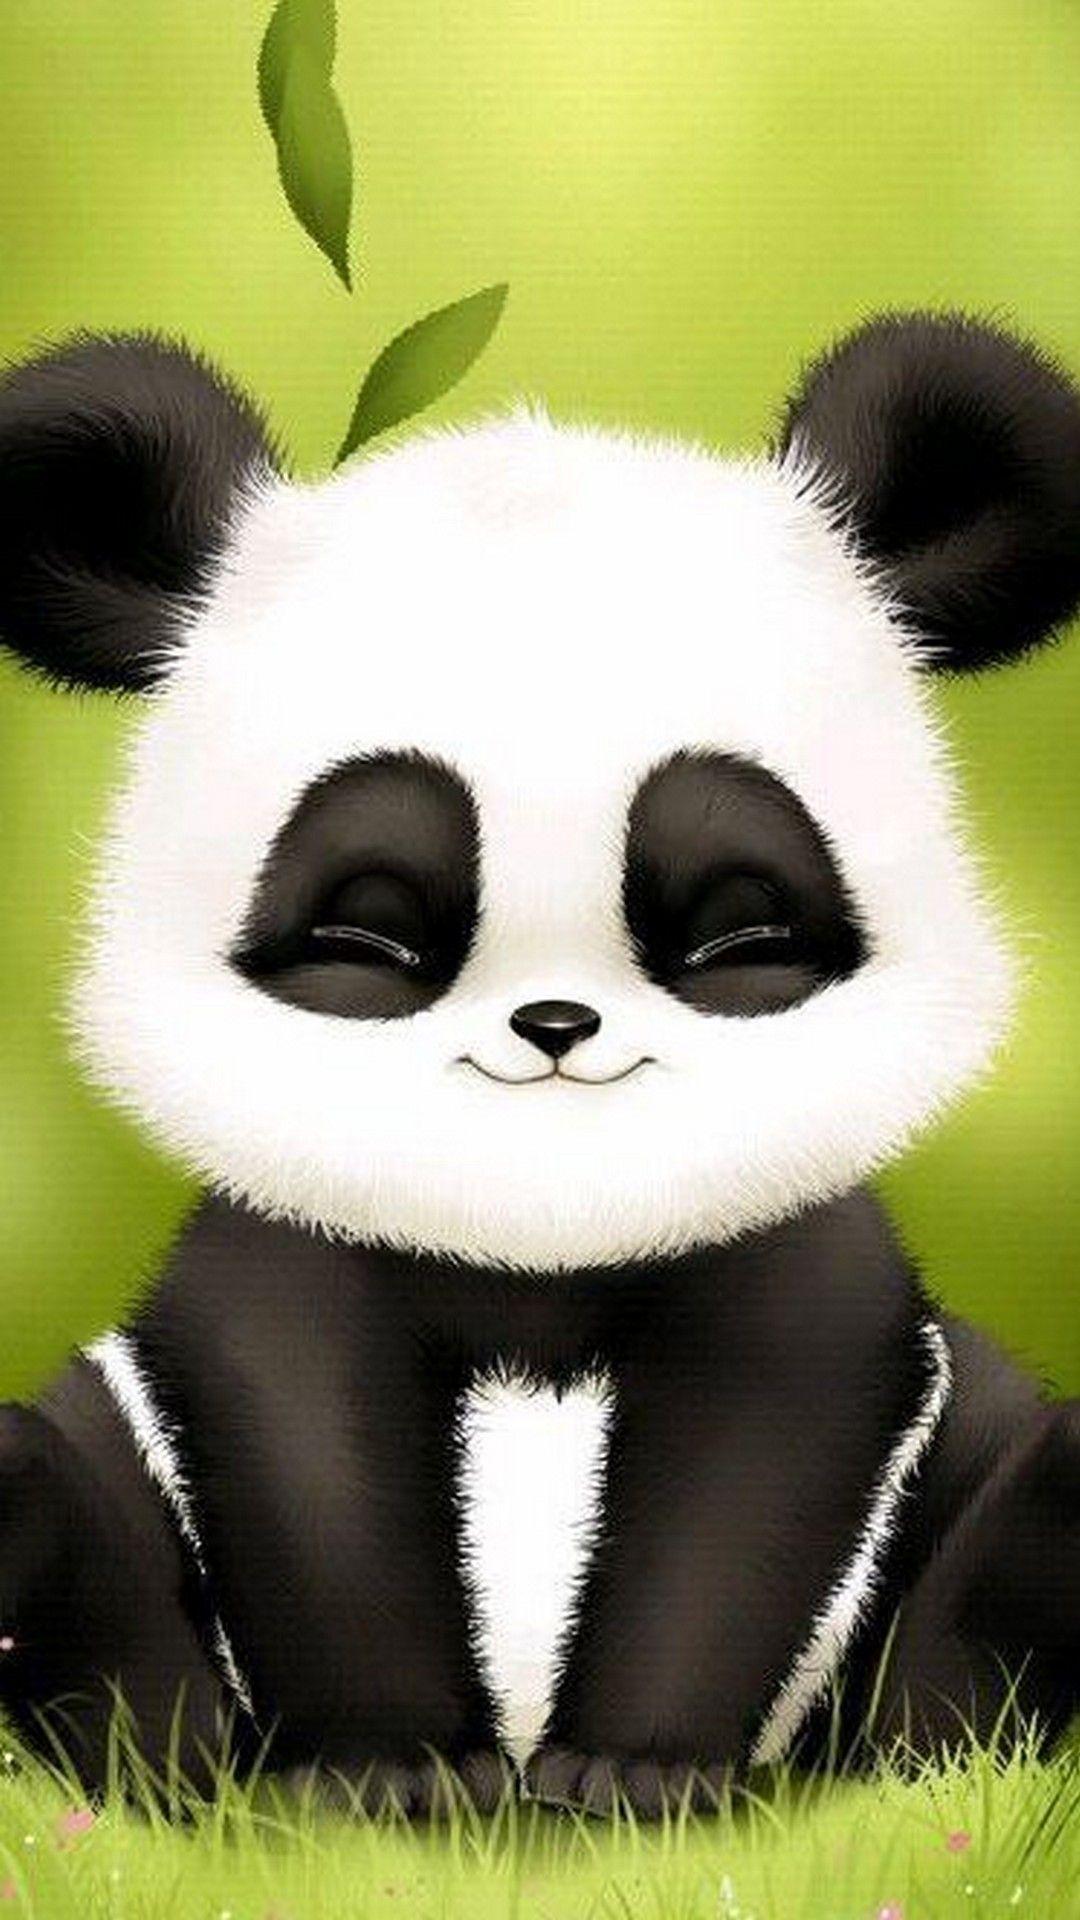 Cute Panda Wallpaper For Phone. Best HD Wallpaper. Cute panda wallpaper, Panda background, Cartoon panda